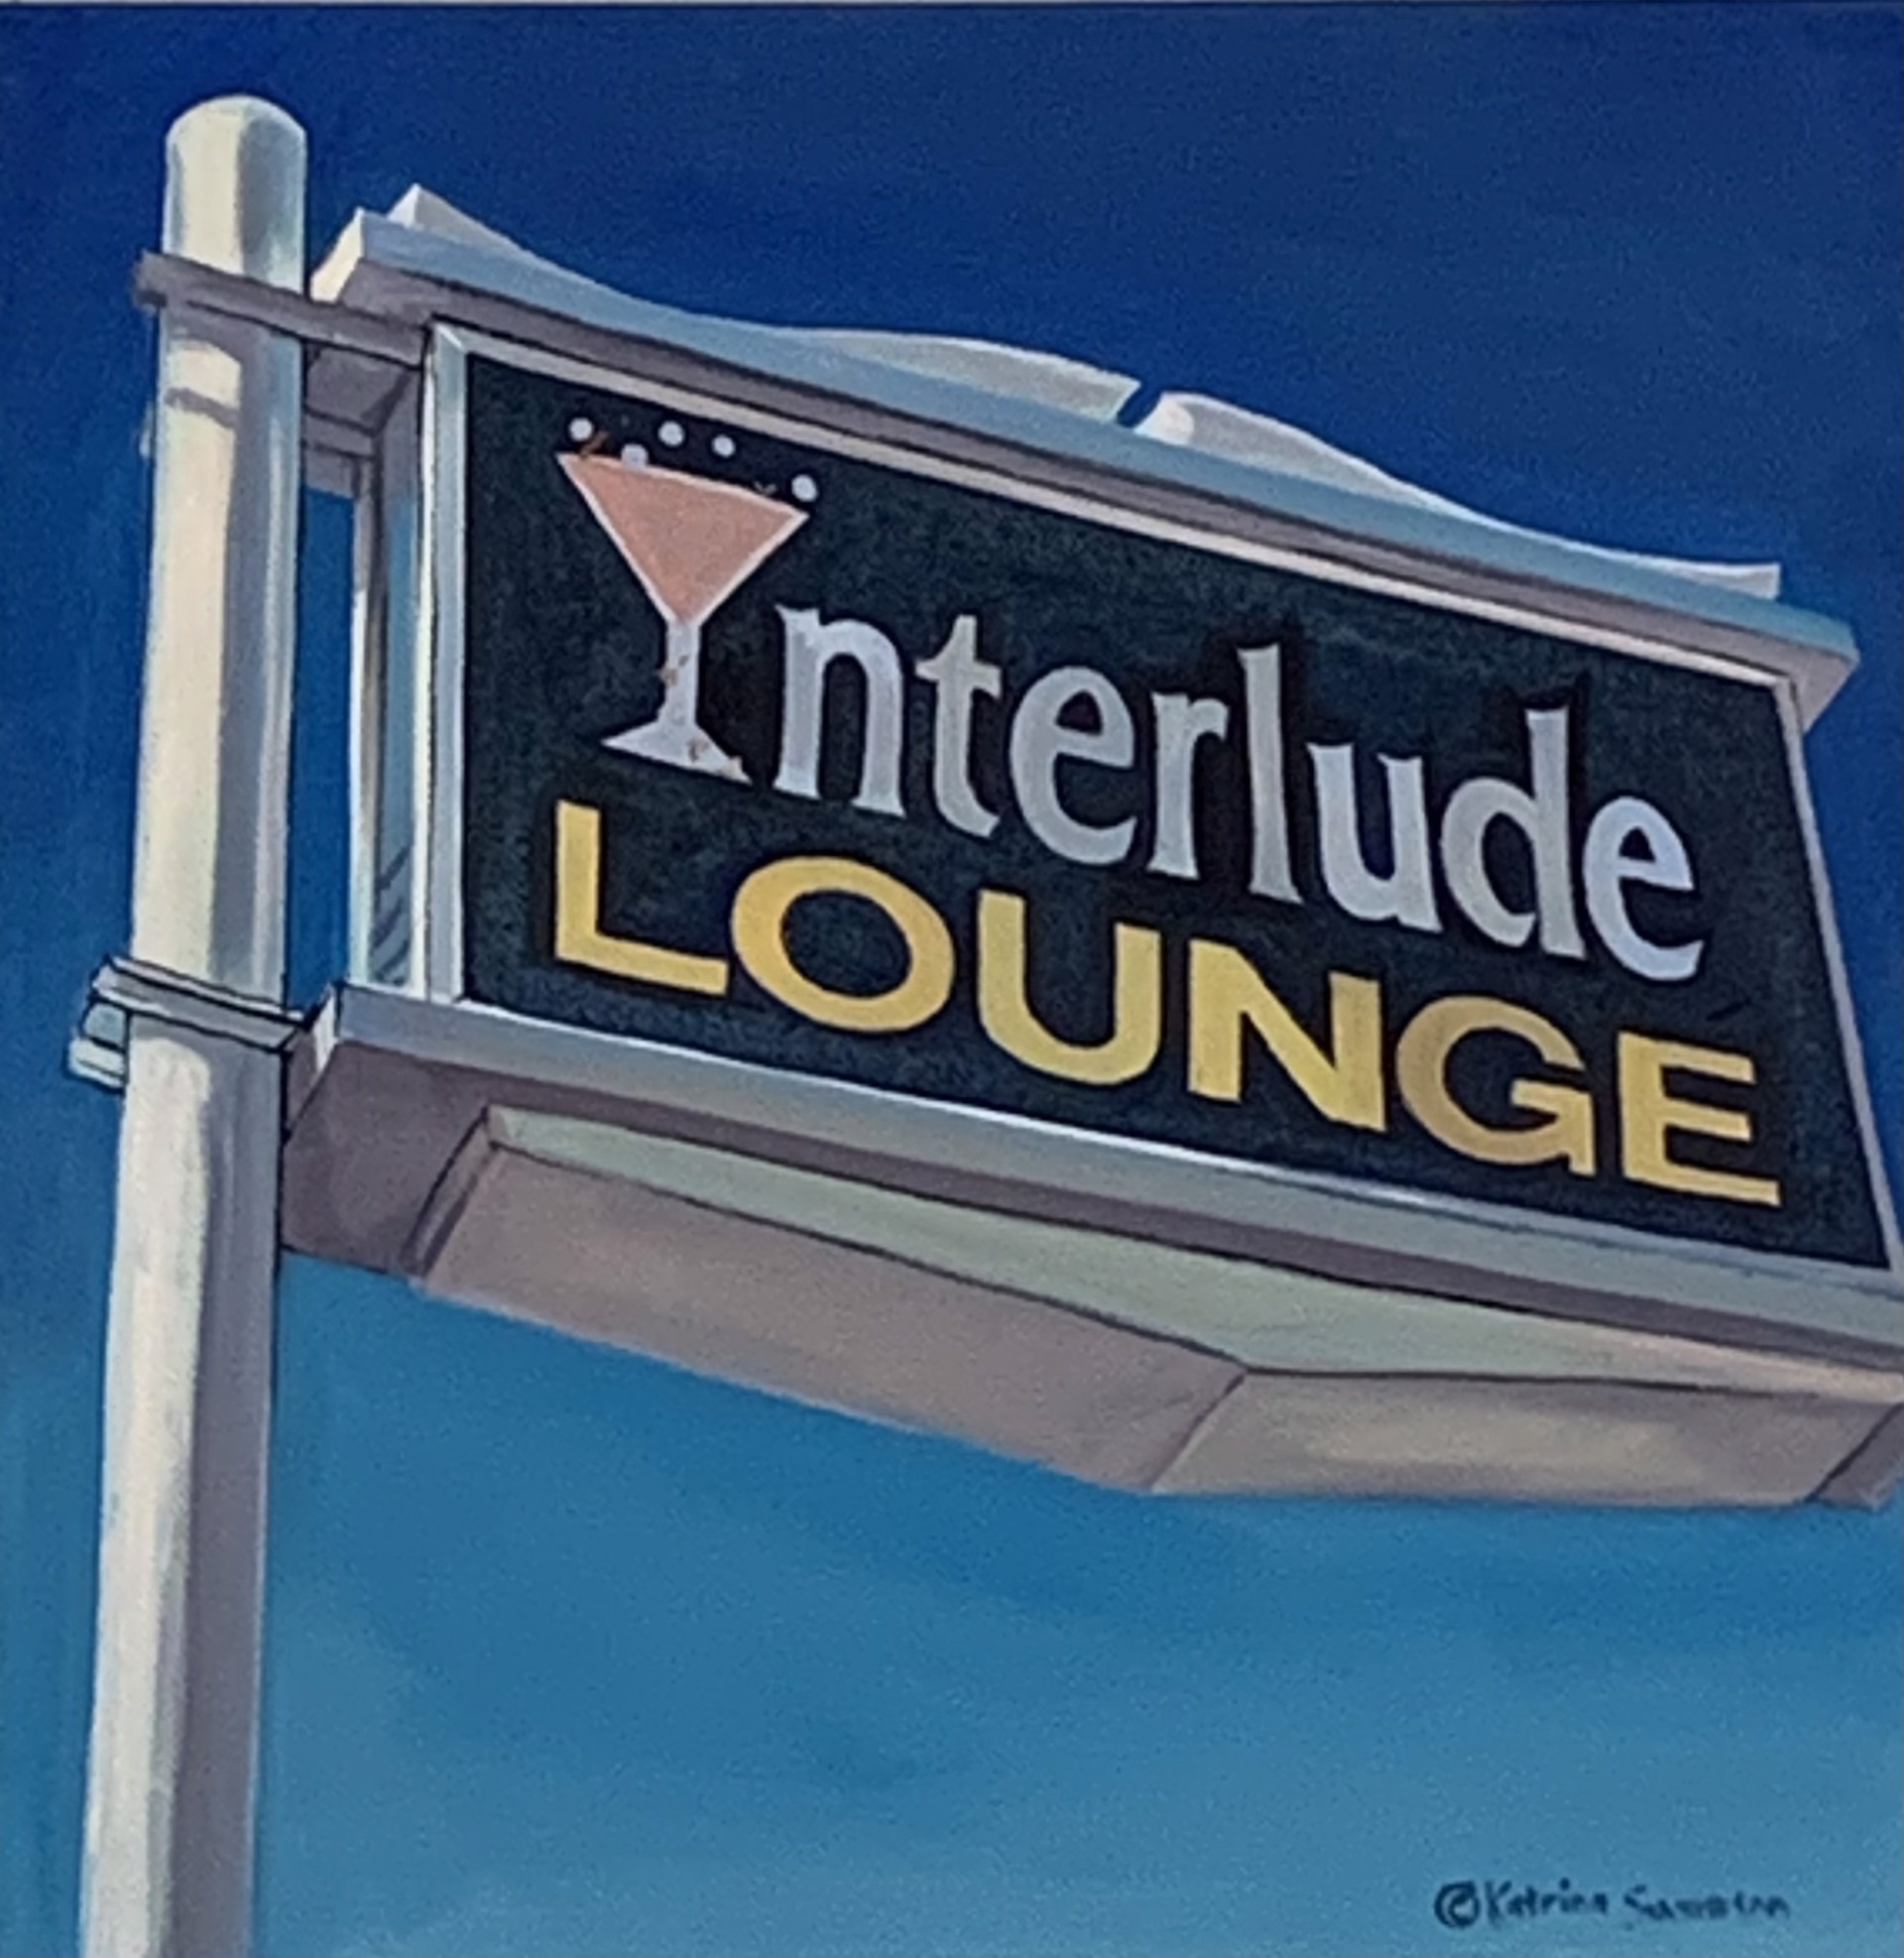 Interlude Lounge by Katrina Swanson